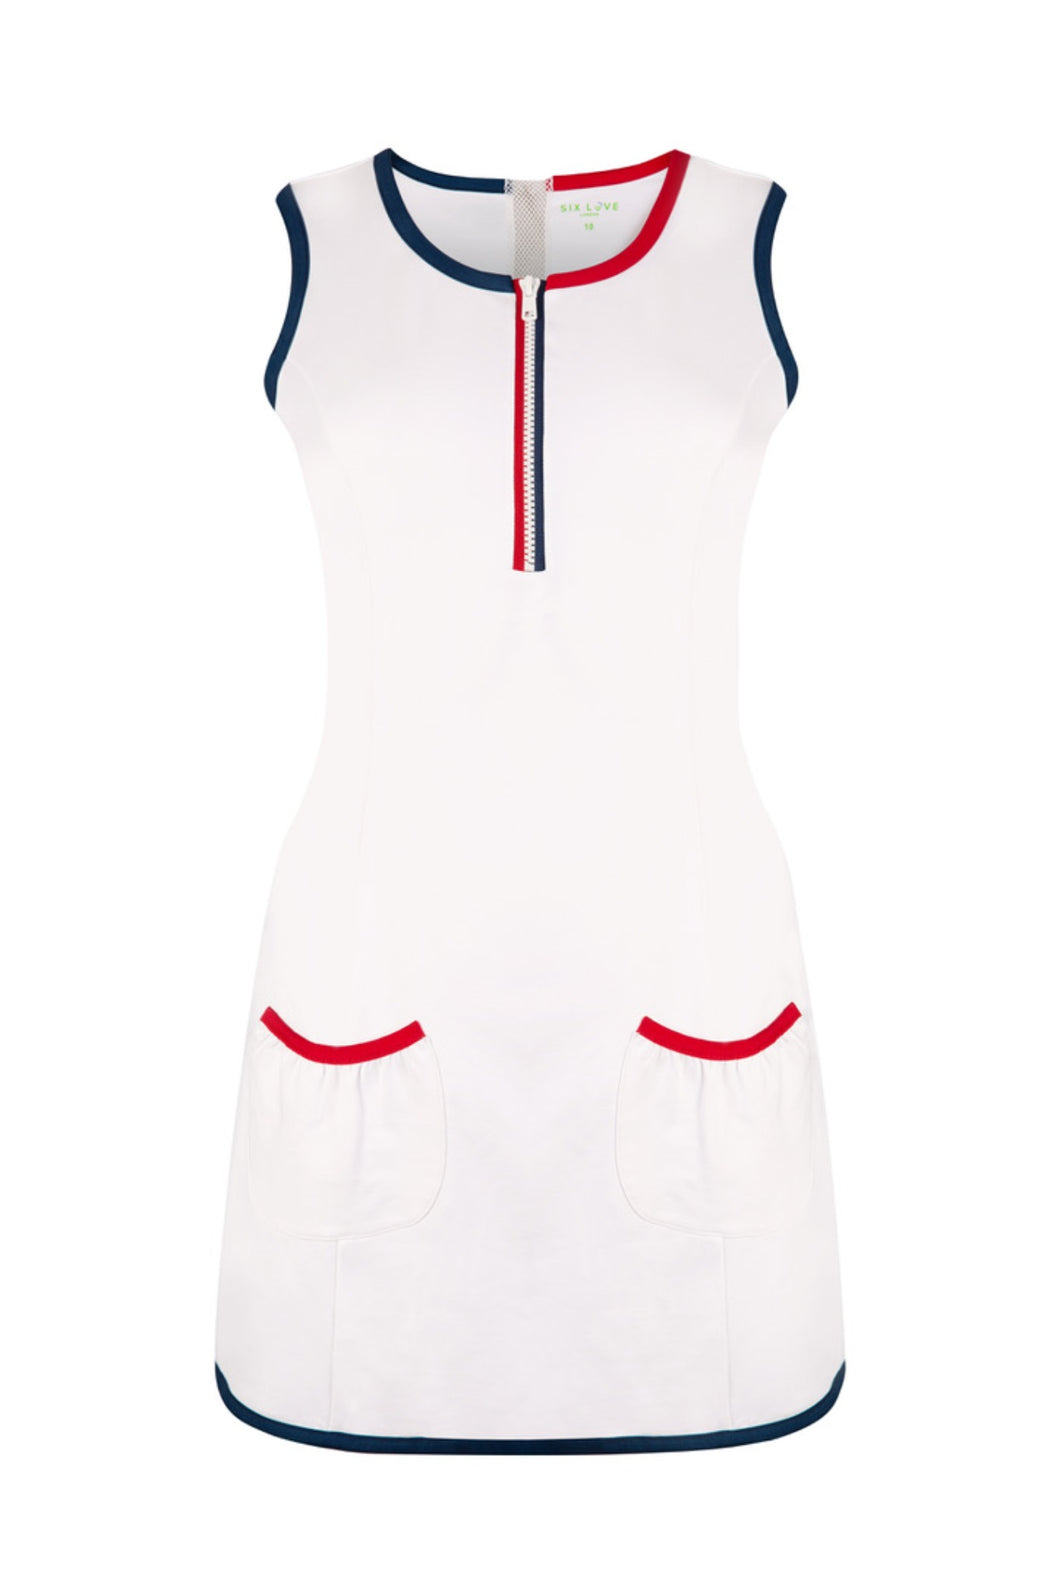 The Emma Tennis Dress